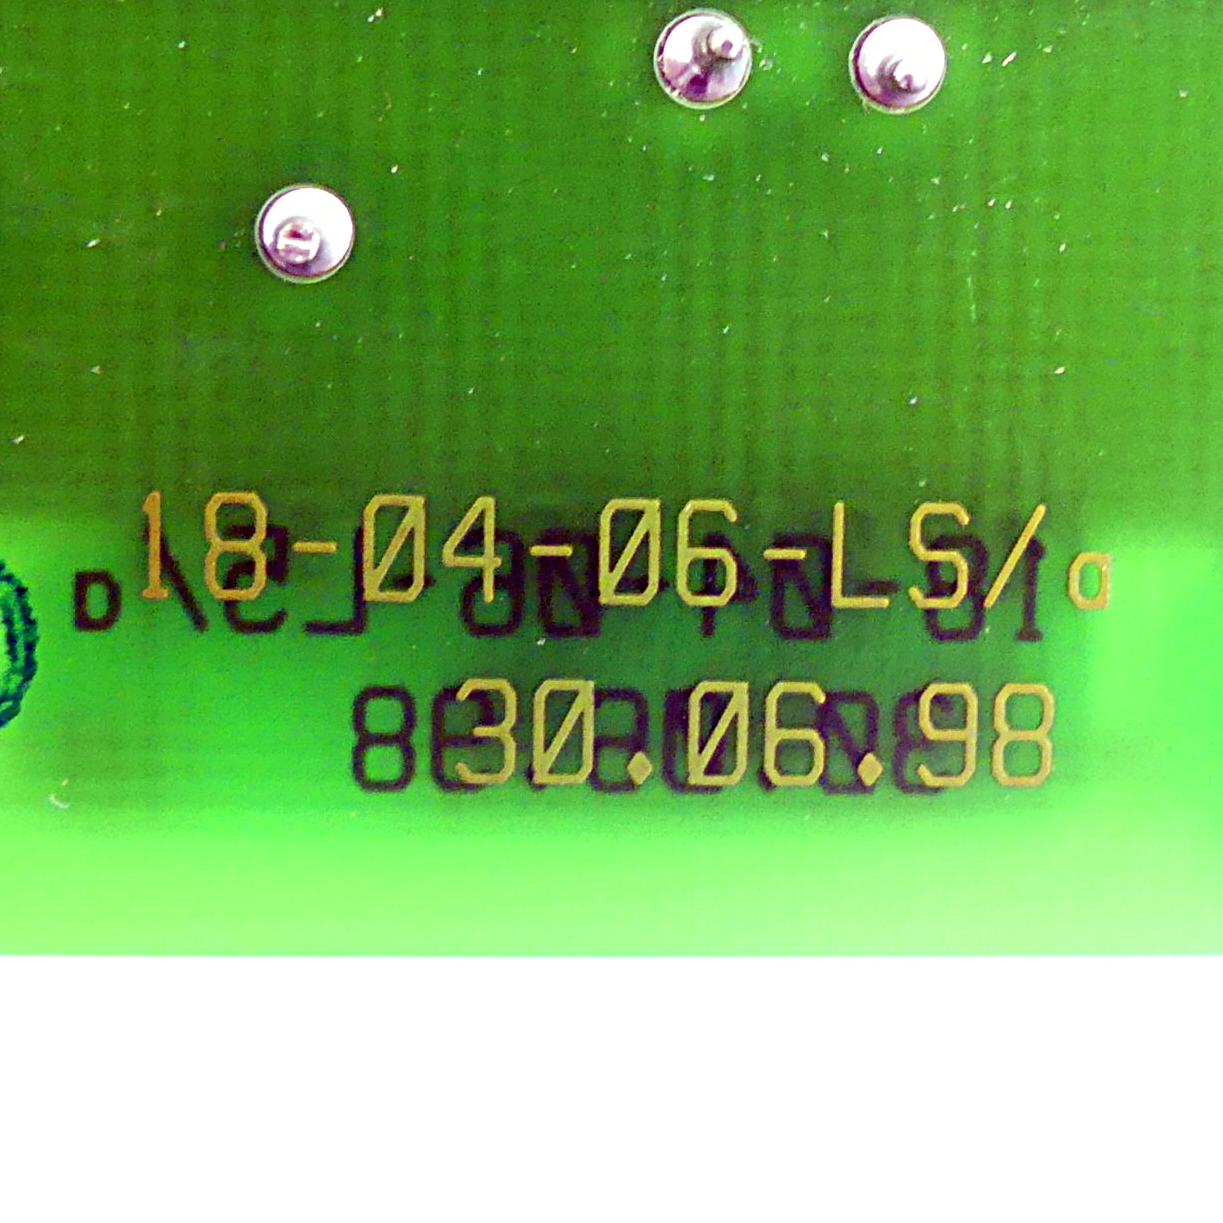 Haas-Laser Circuit board 18-04-06-LS 